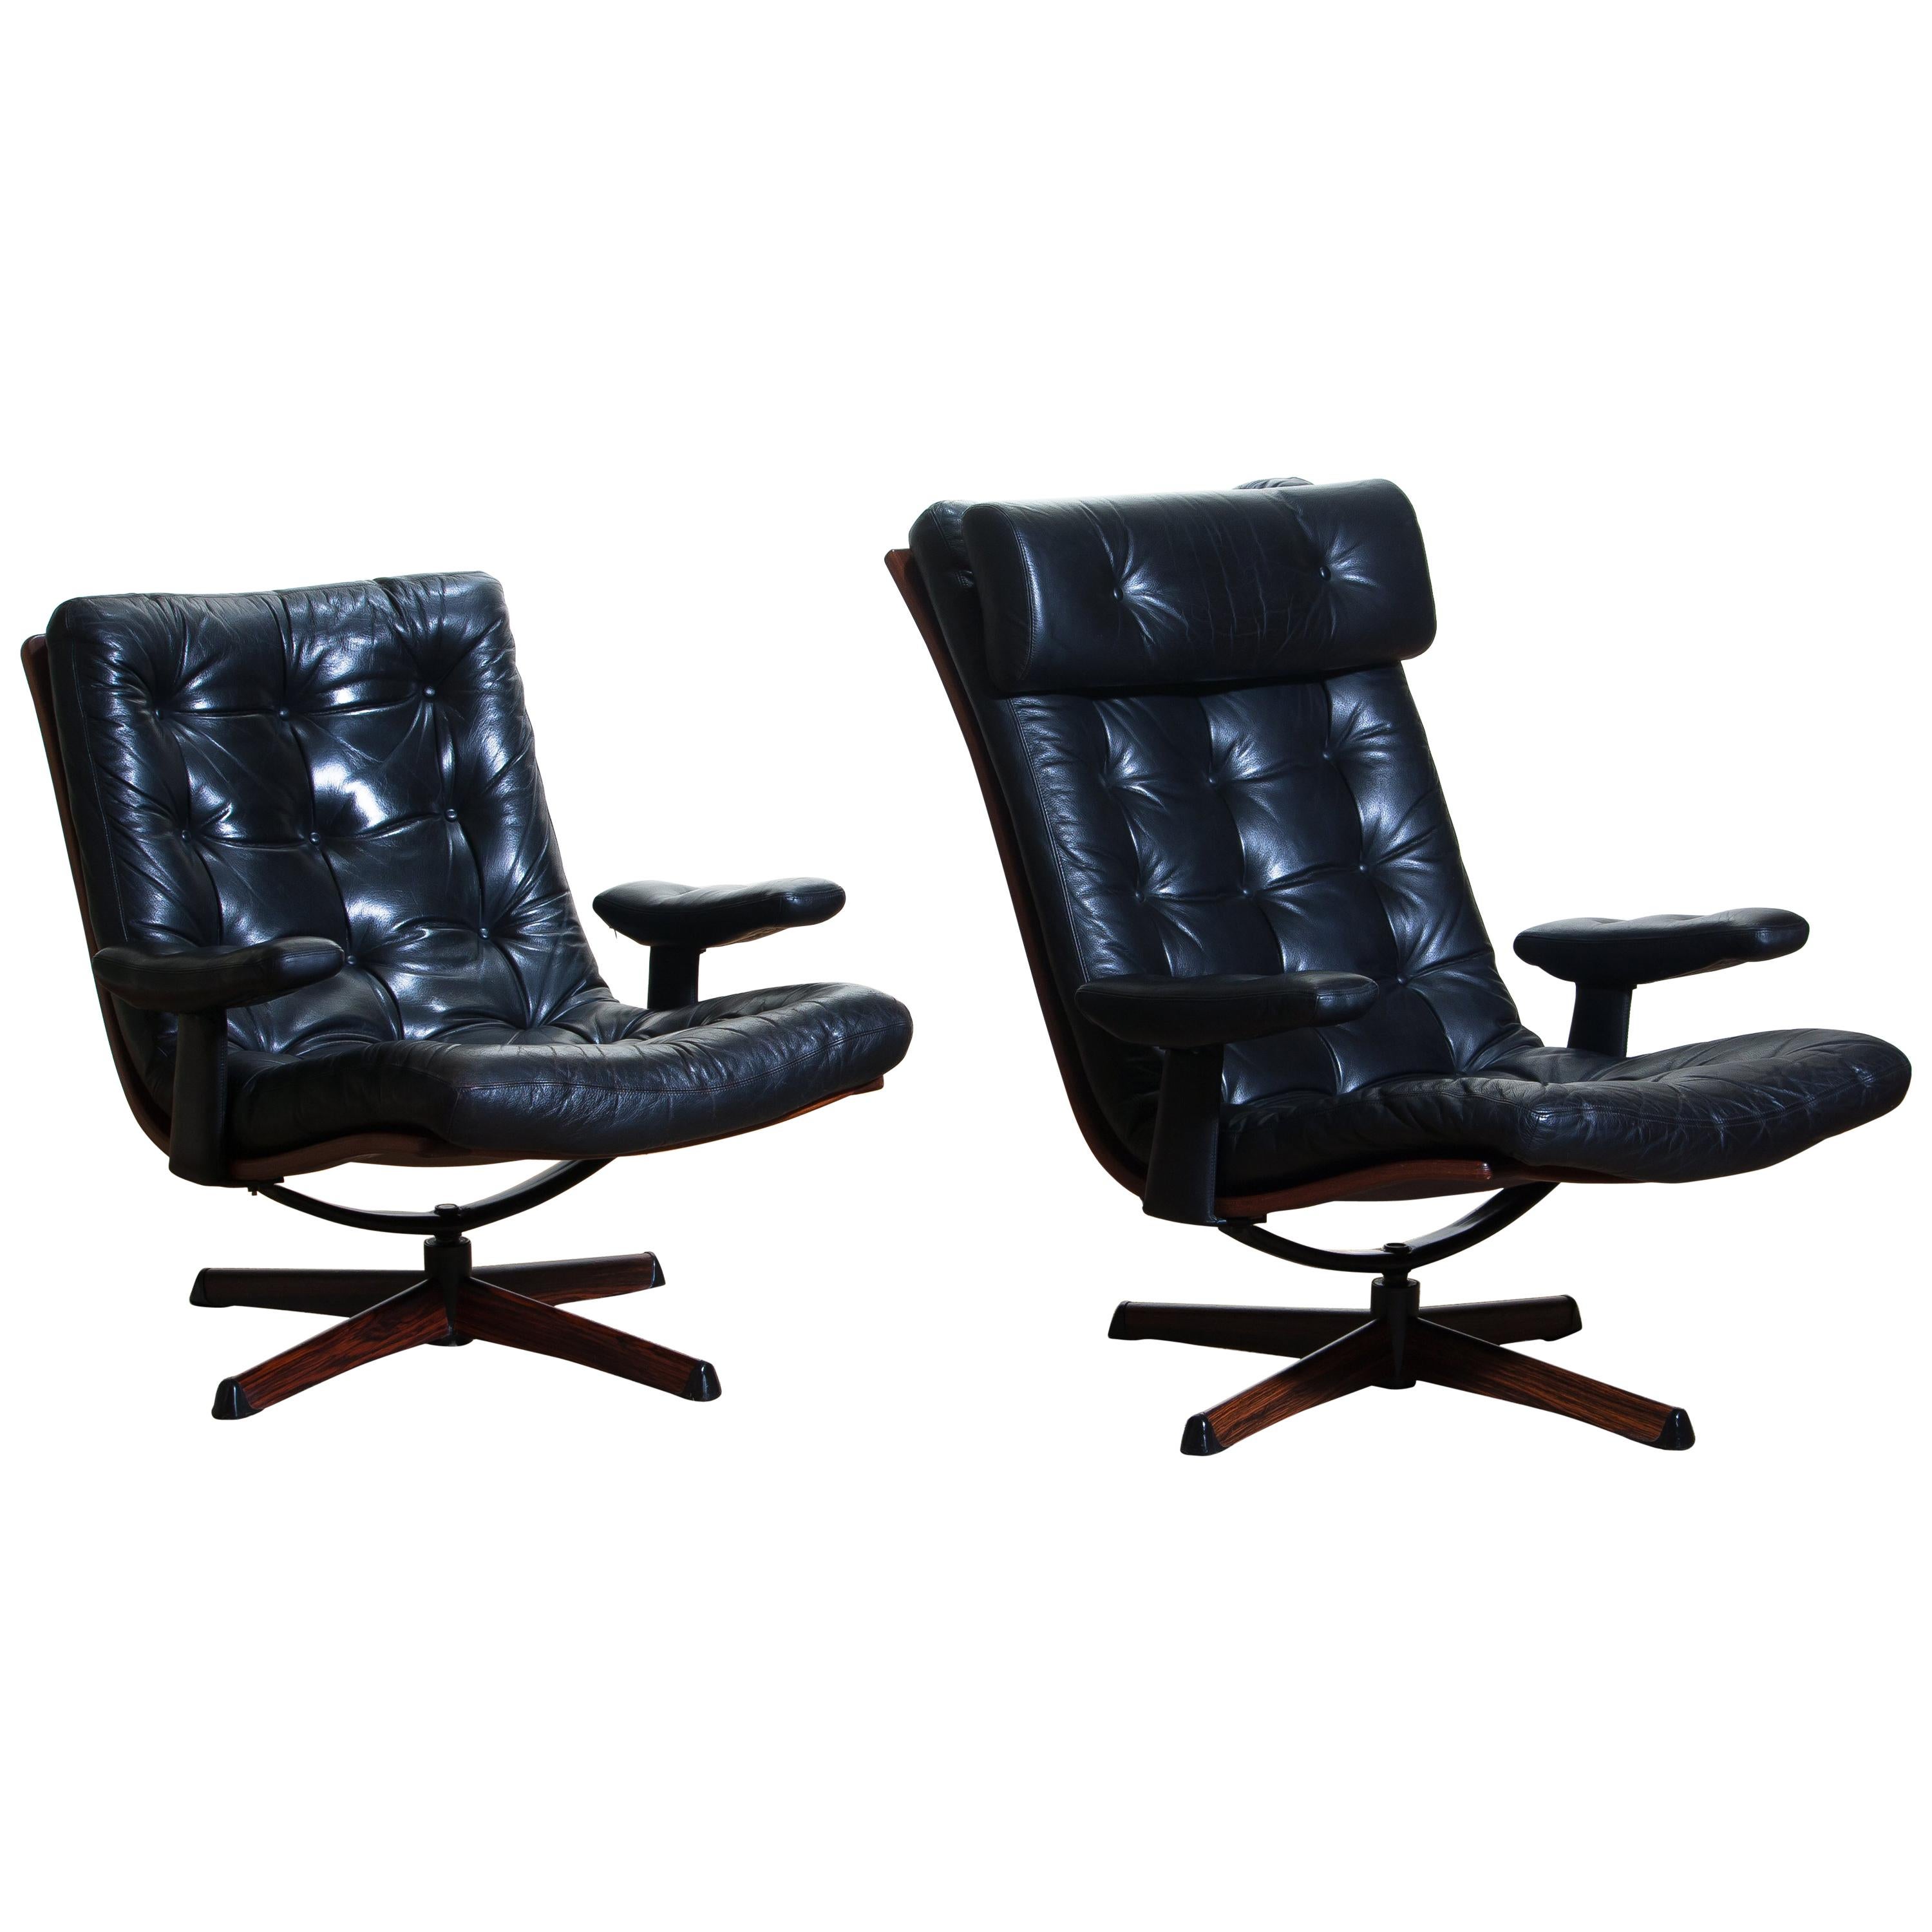 1960s Matching Pair of Black Leather Swivel Chairs by Göte Möbler Nässjö, Sweden 1